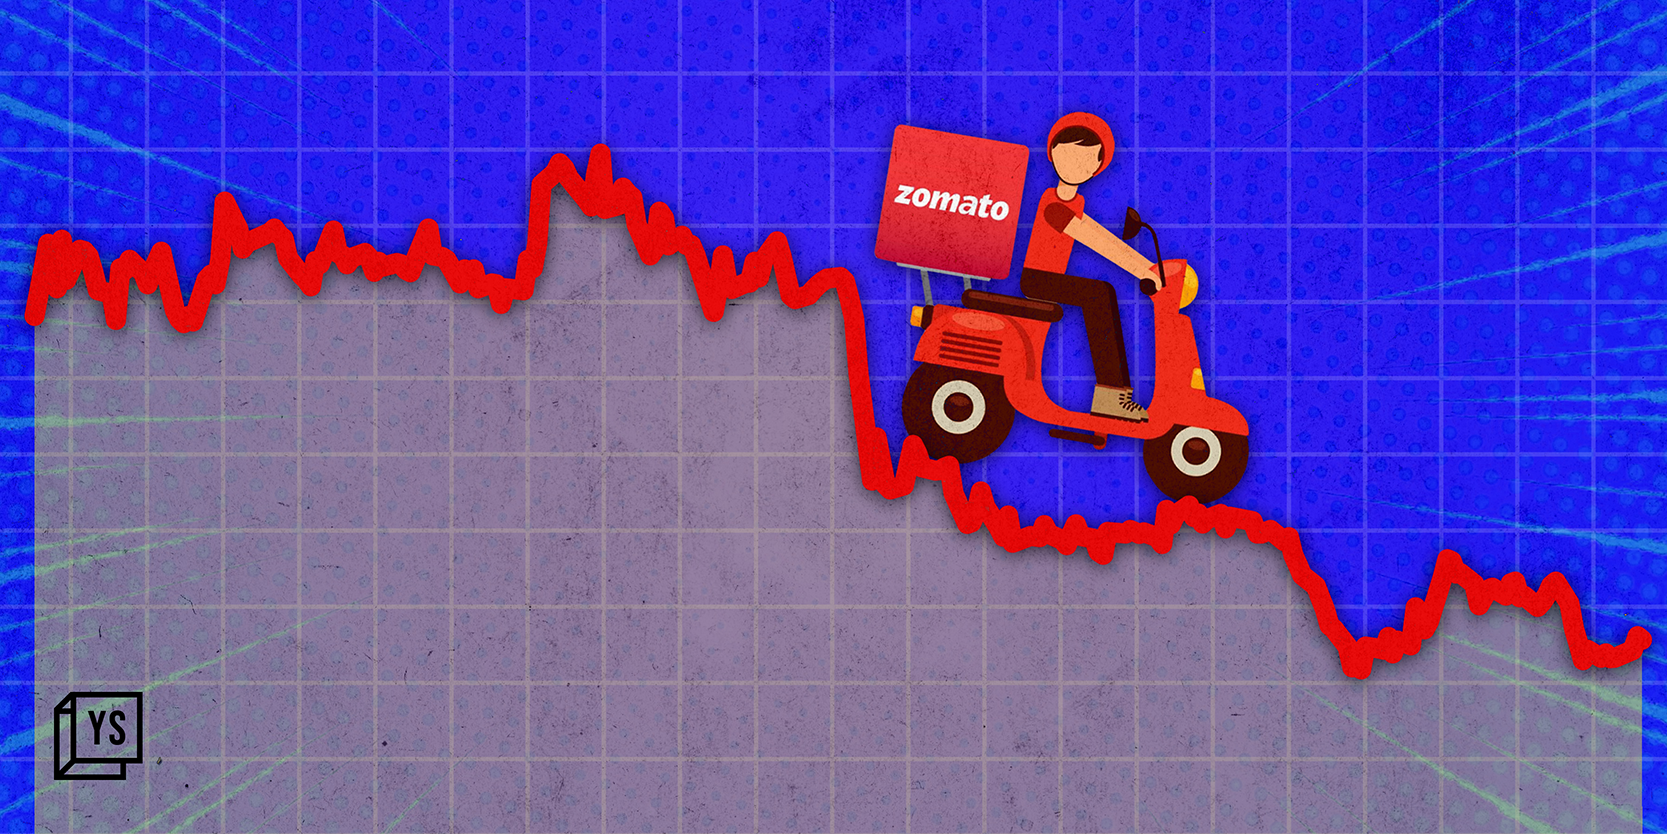 One year since IPO: Zomato’s choppy ride